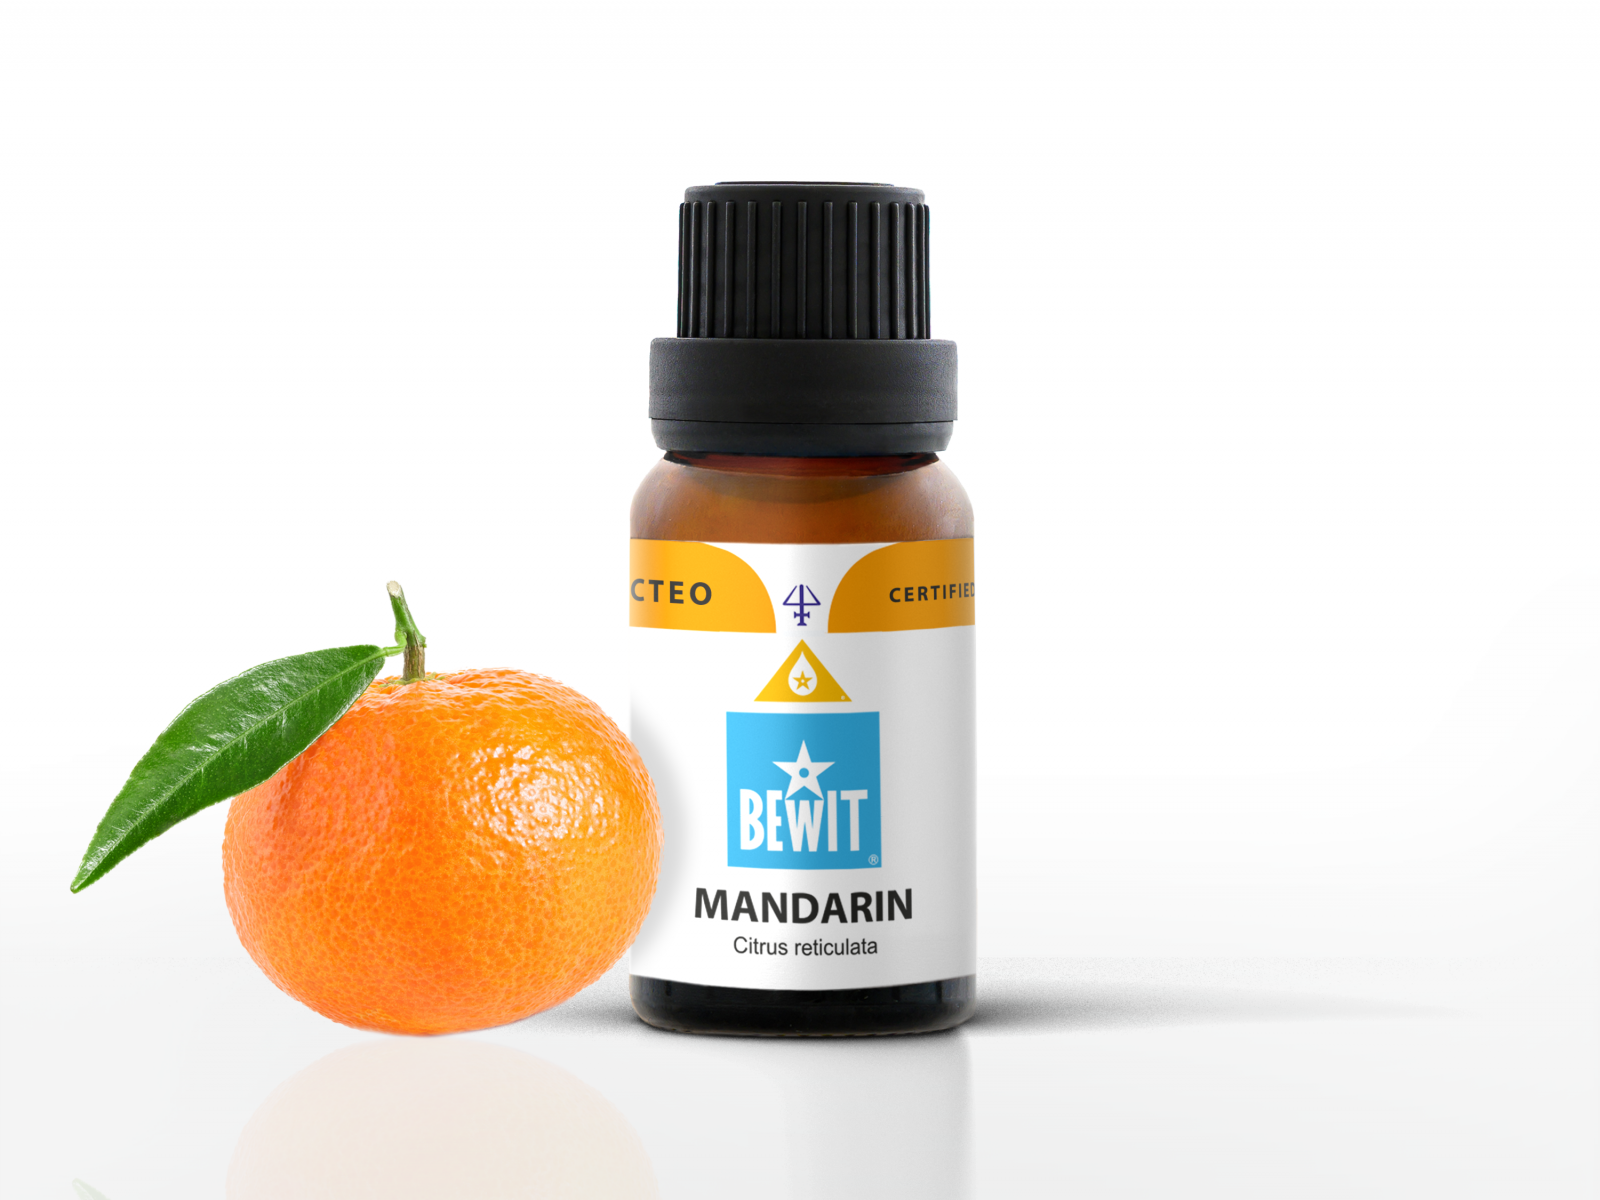 Mandarin - It is a 100% pure essential oil